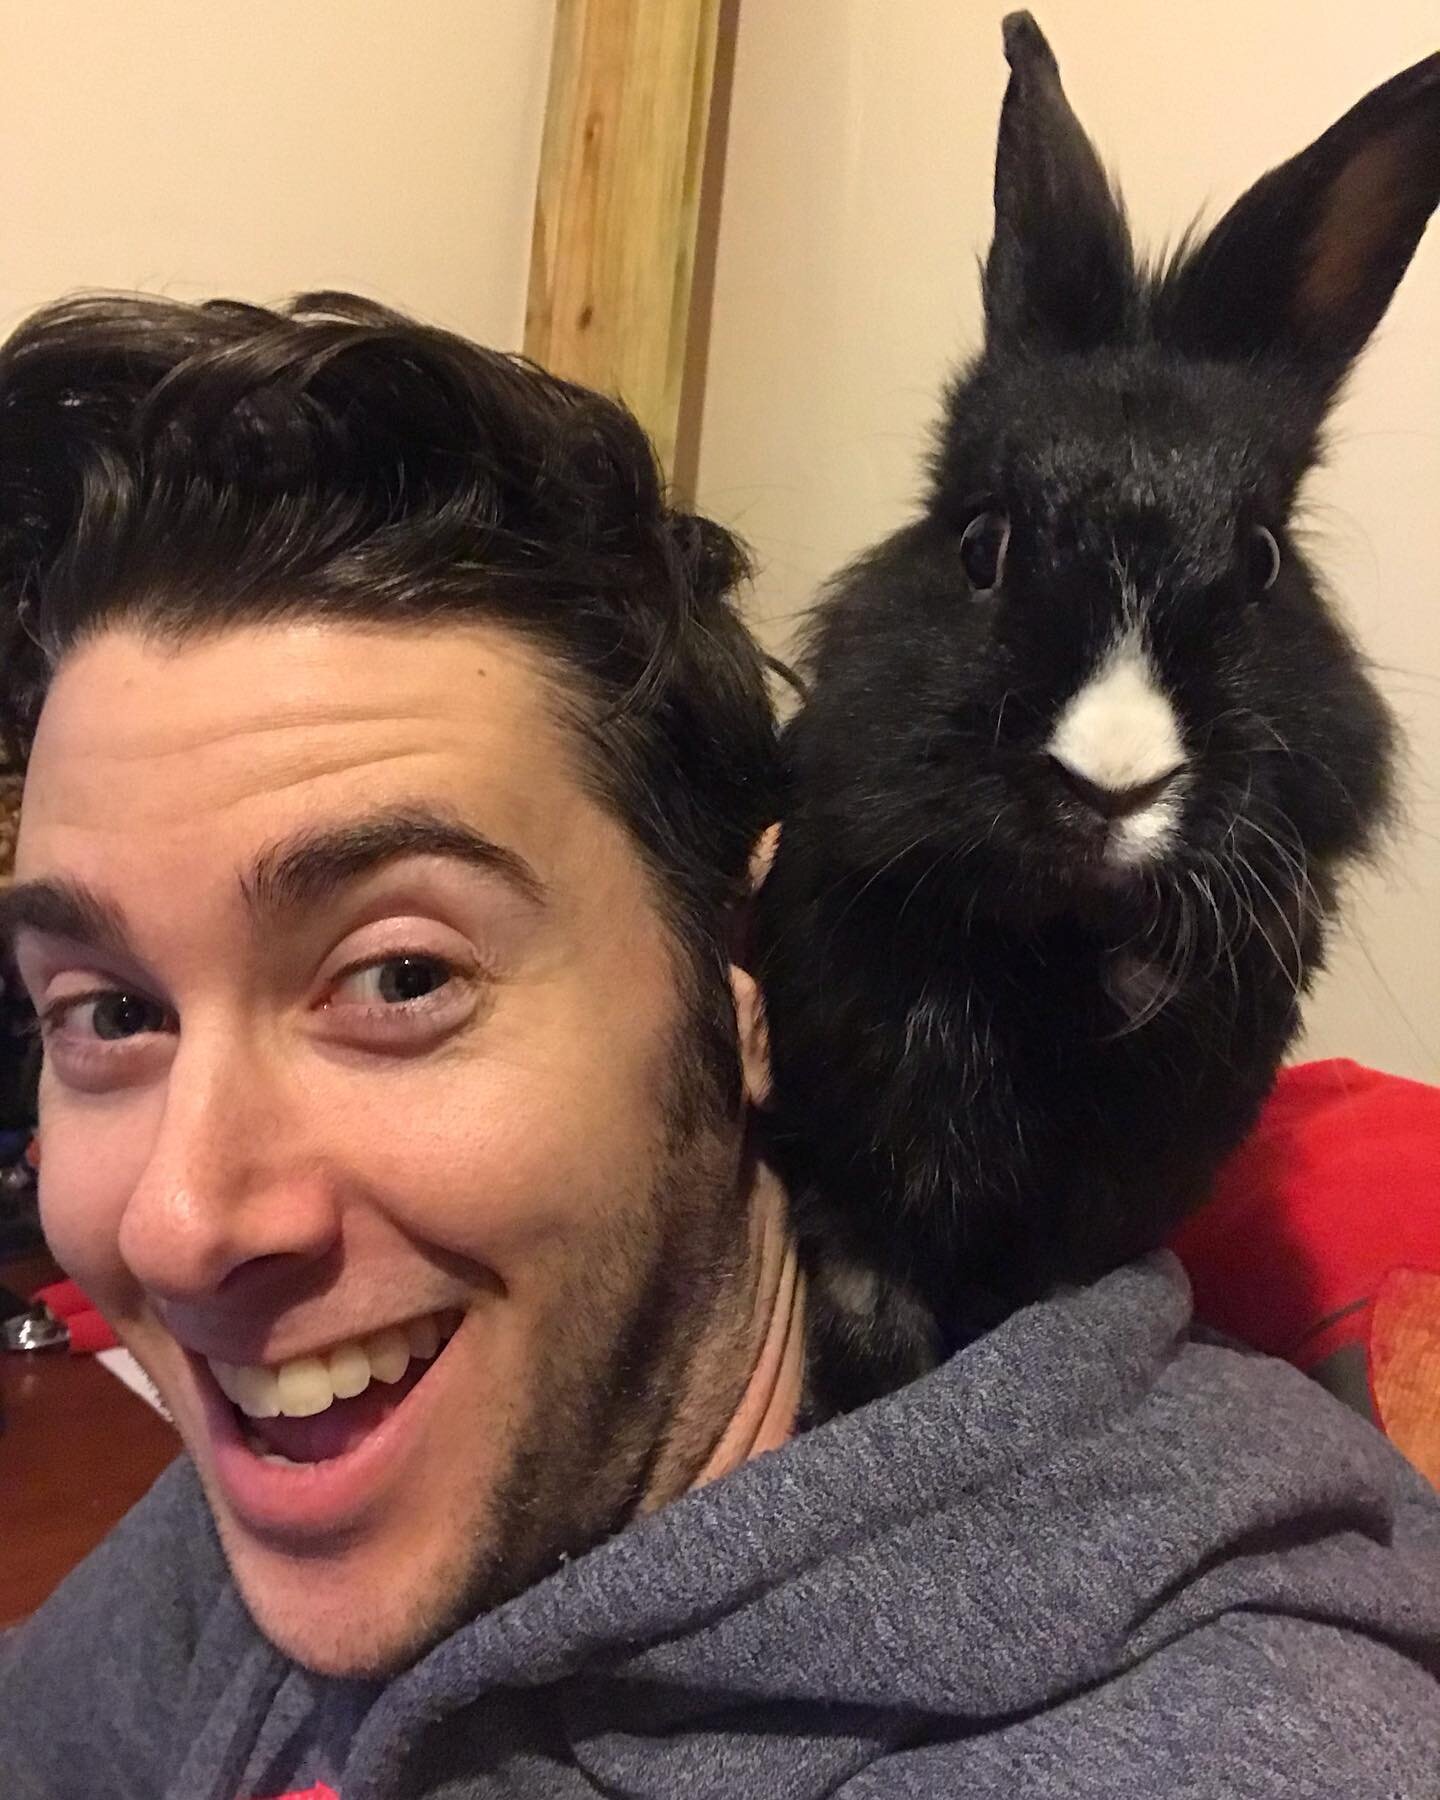 Happy Year of the Rabbit!

#HappyLunarNewYear #LunarNewYear #🐰 #YearoftheRabbit #2023 #MagicRabbit #Magician #rabbit #pet #animal #bunny #rabbit #petsofinstagram #petstagram #cuteanimals
#rabbitsofinstagram #bunniesofinstagram #rabbitstagram #instab